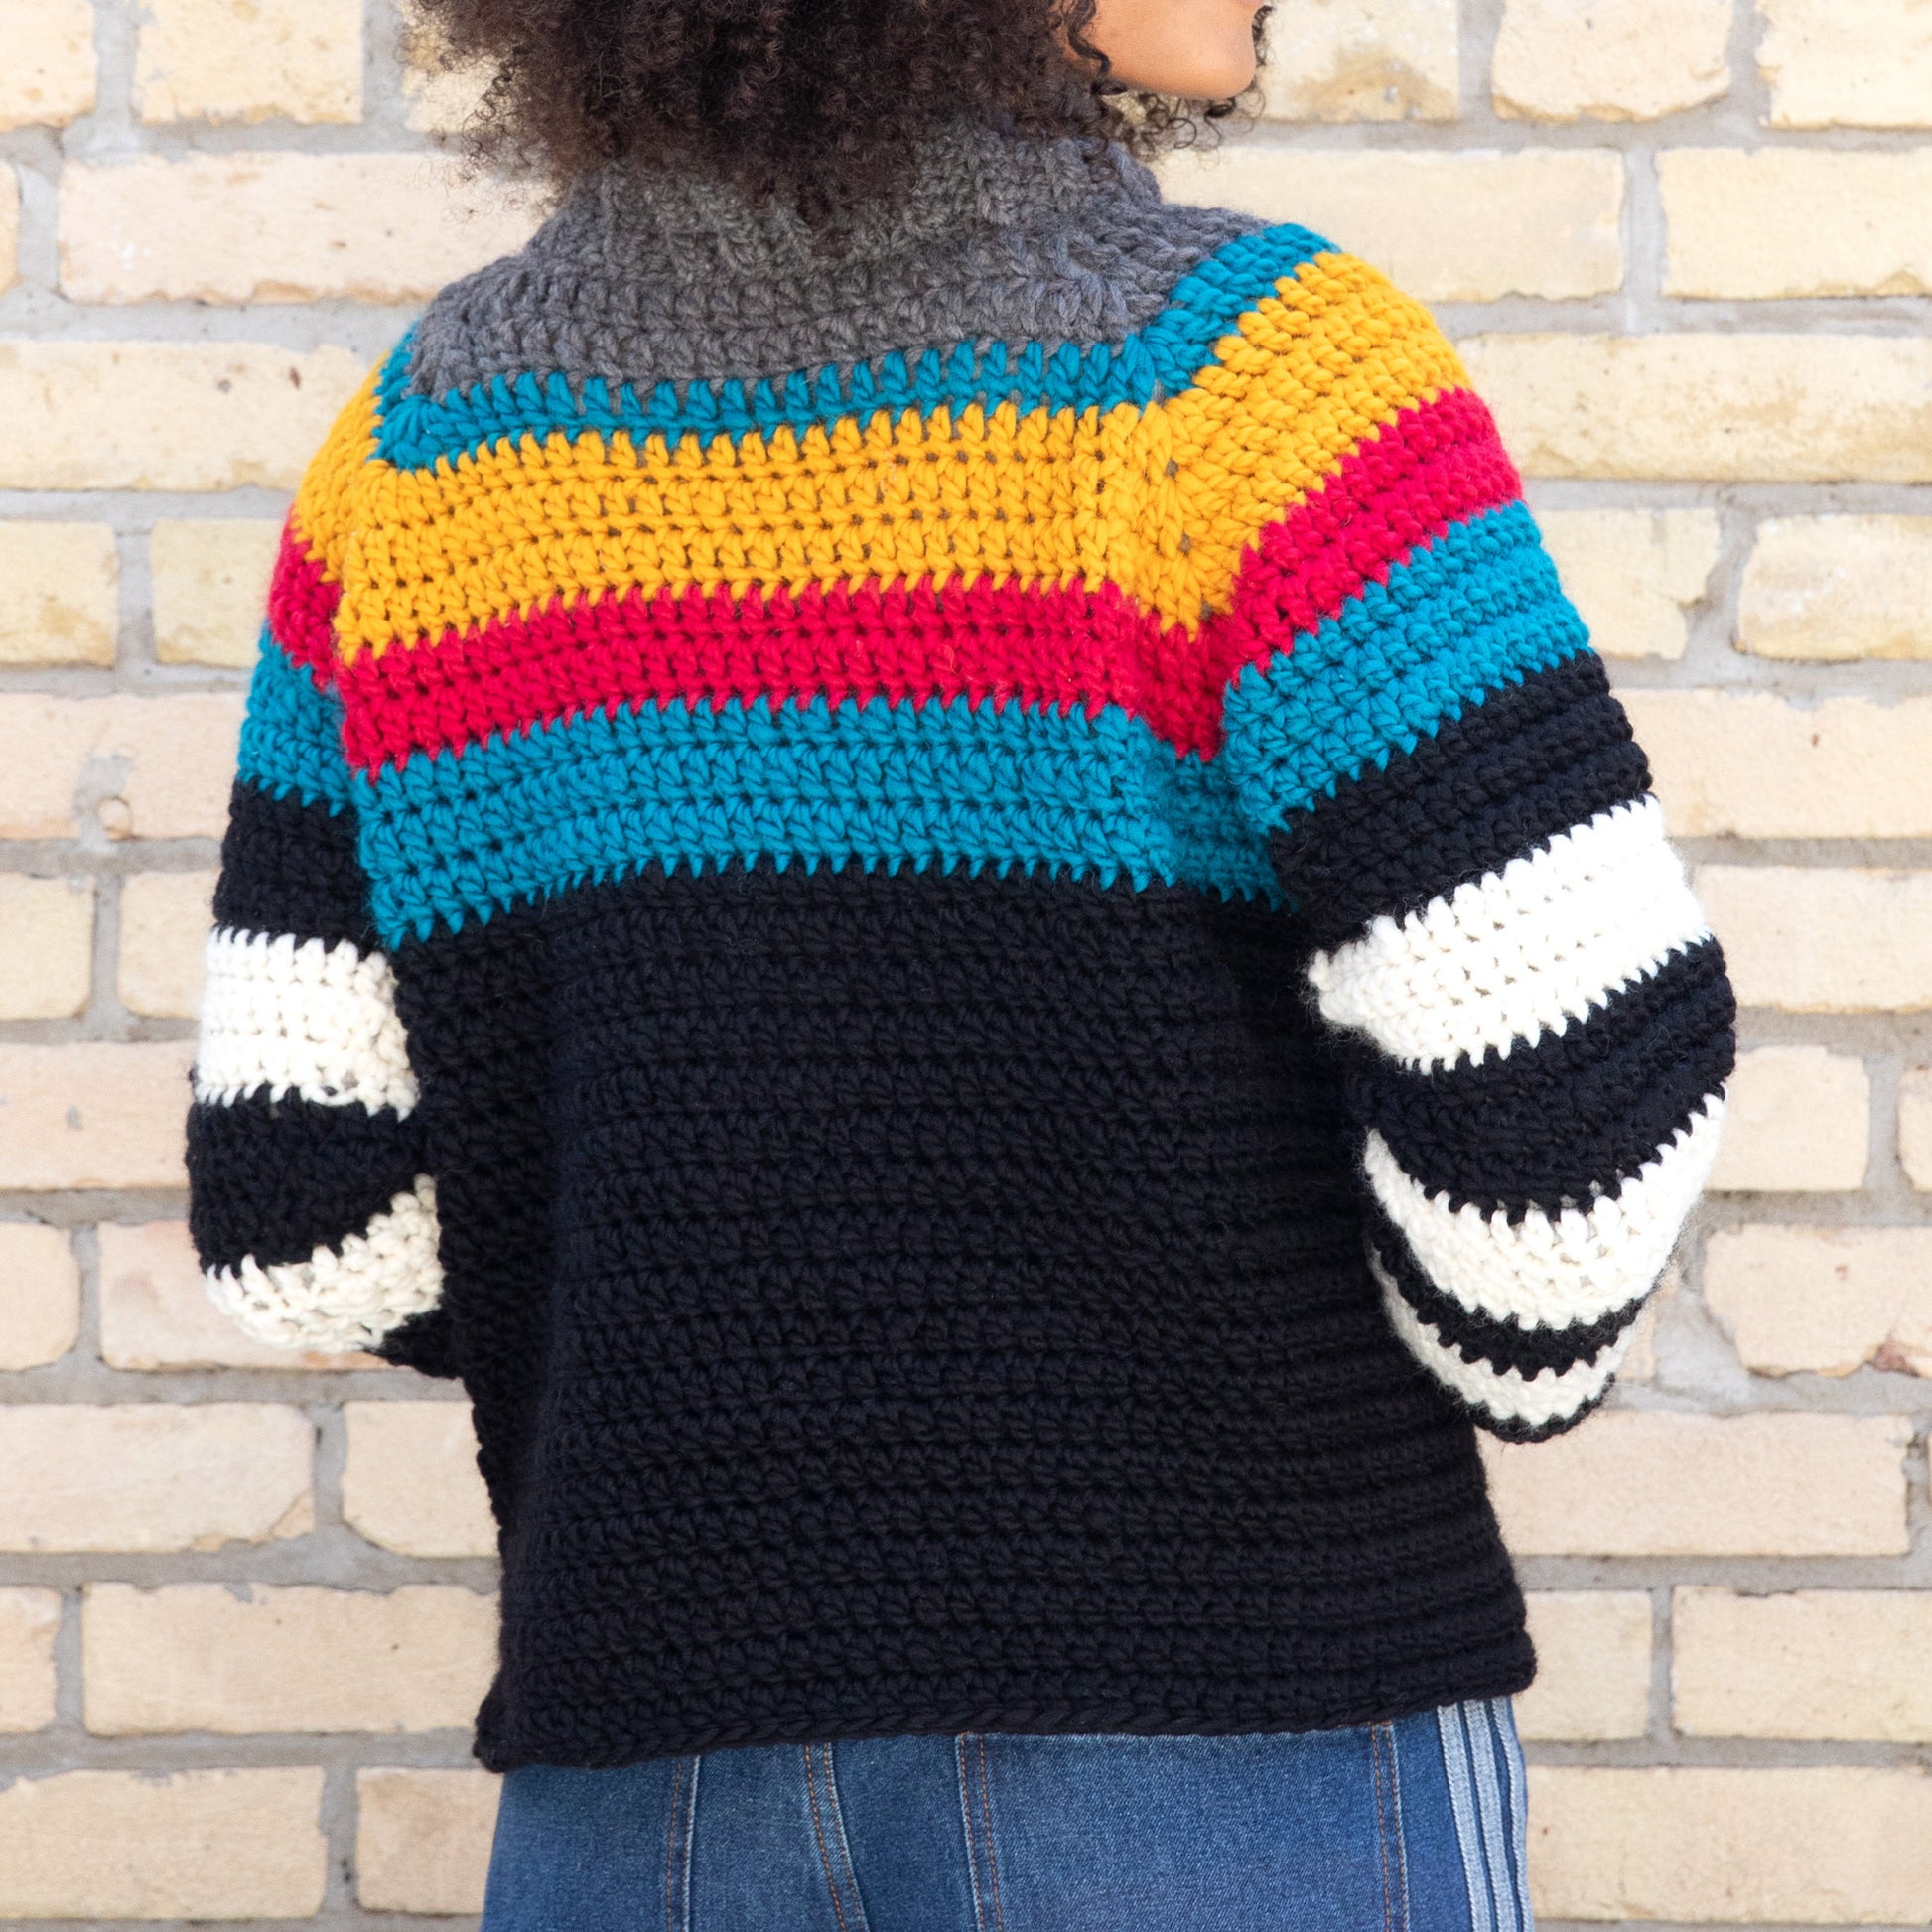 Patons Stripe It Bright Crochet Sweater Patons Stripe It Bright Crochet Sweater